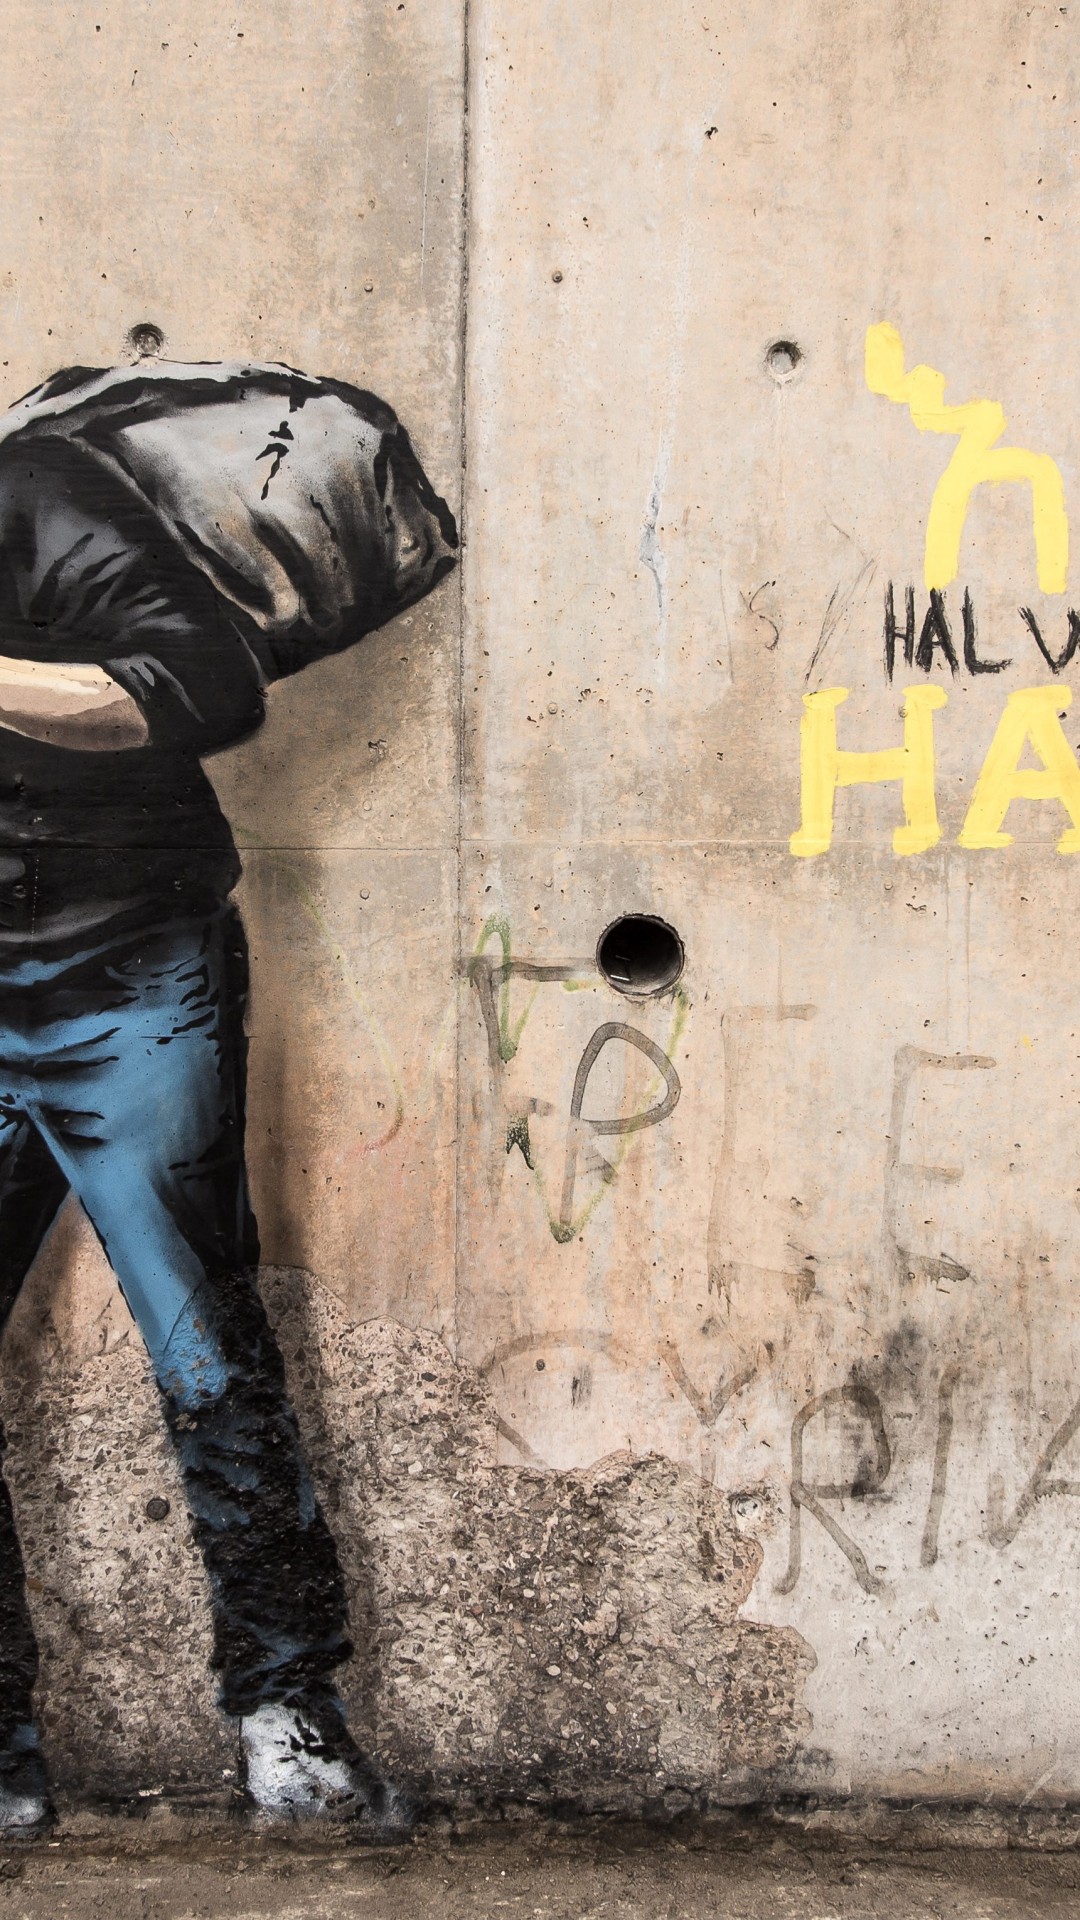 Iphone 8 Plus Banksy Wallpaper - Massive Attack Robert Del Naja - 1080x1920  Wallpaper 